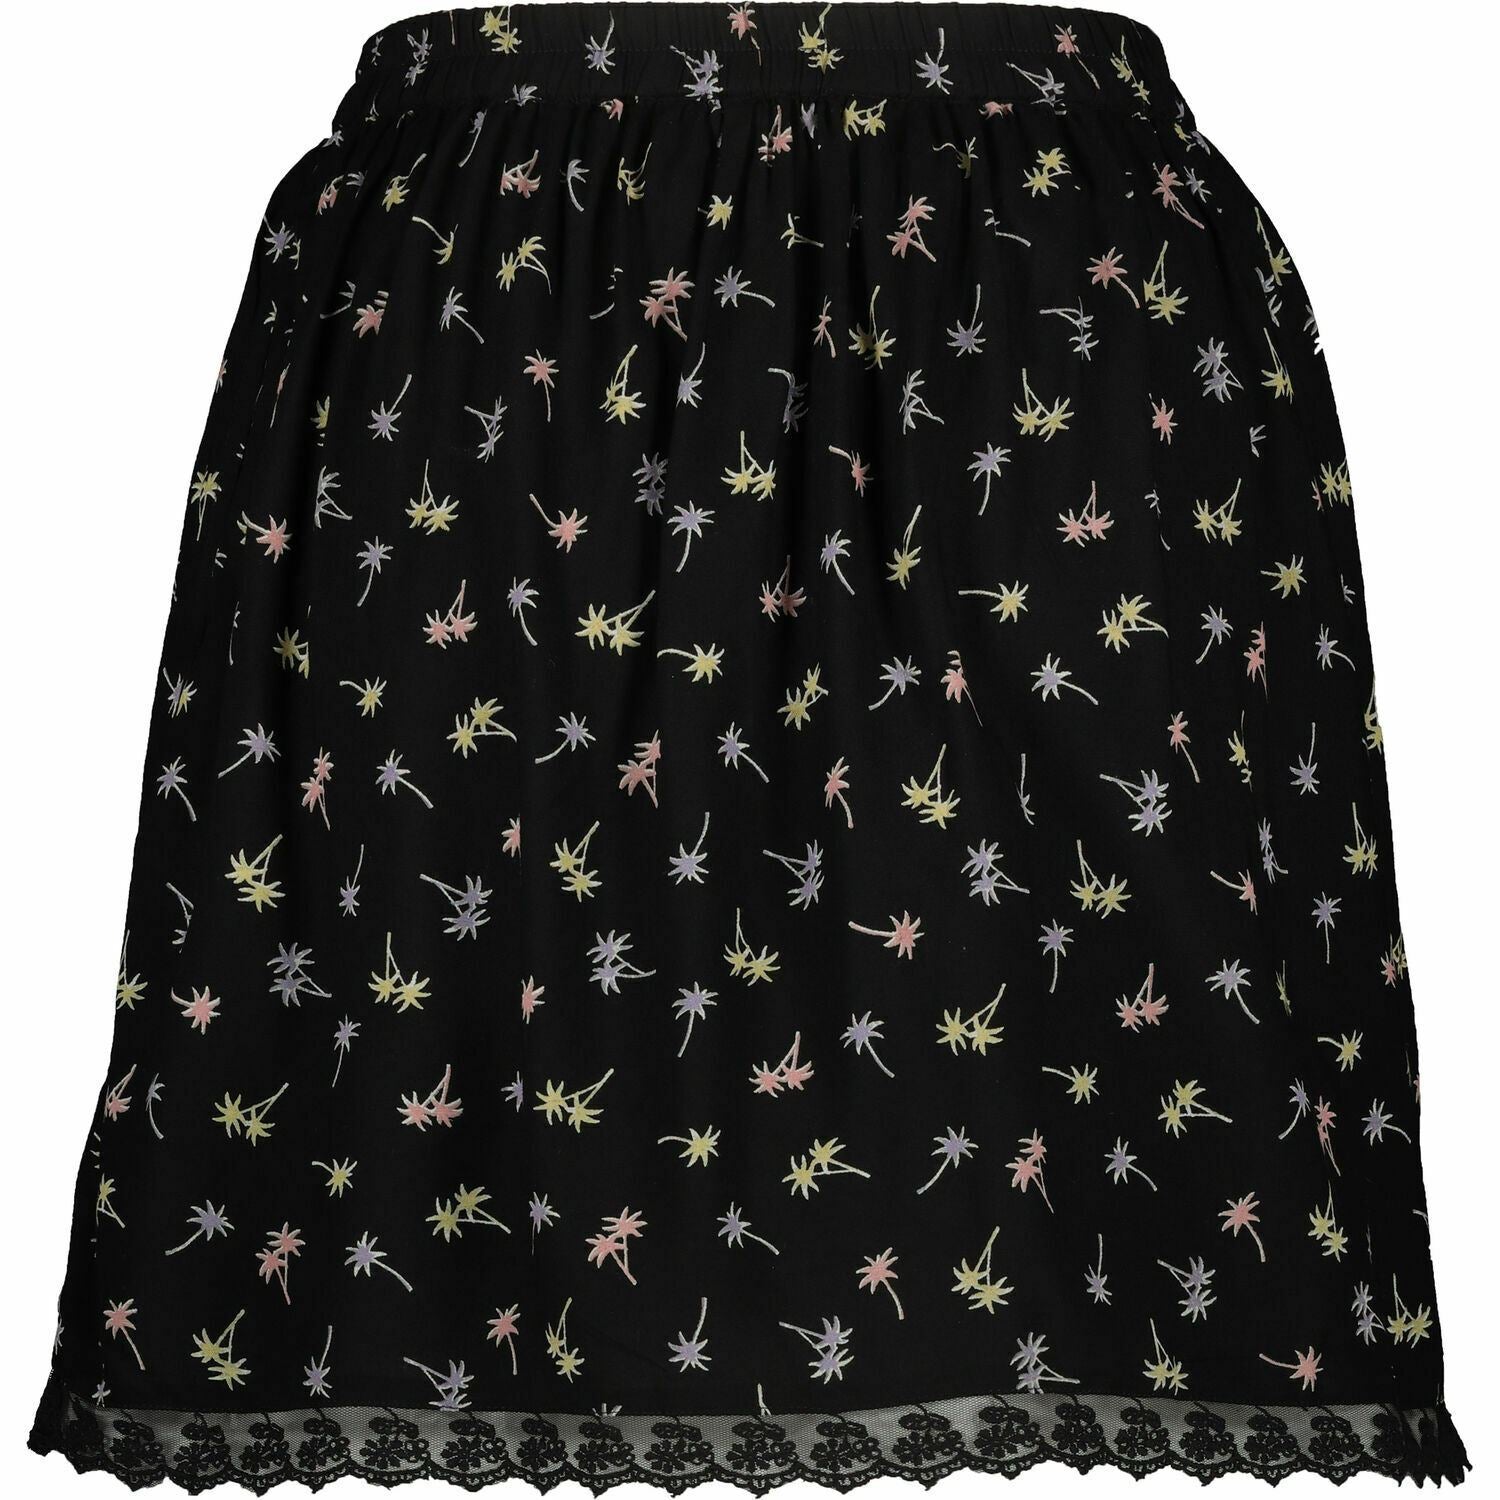 SUPERDRY Women's SERENA DITSY Skirt, Black/Palm Tree Print, size XXS / UK 6